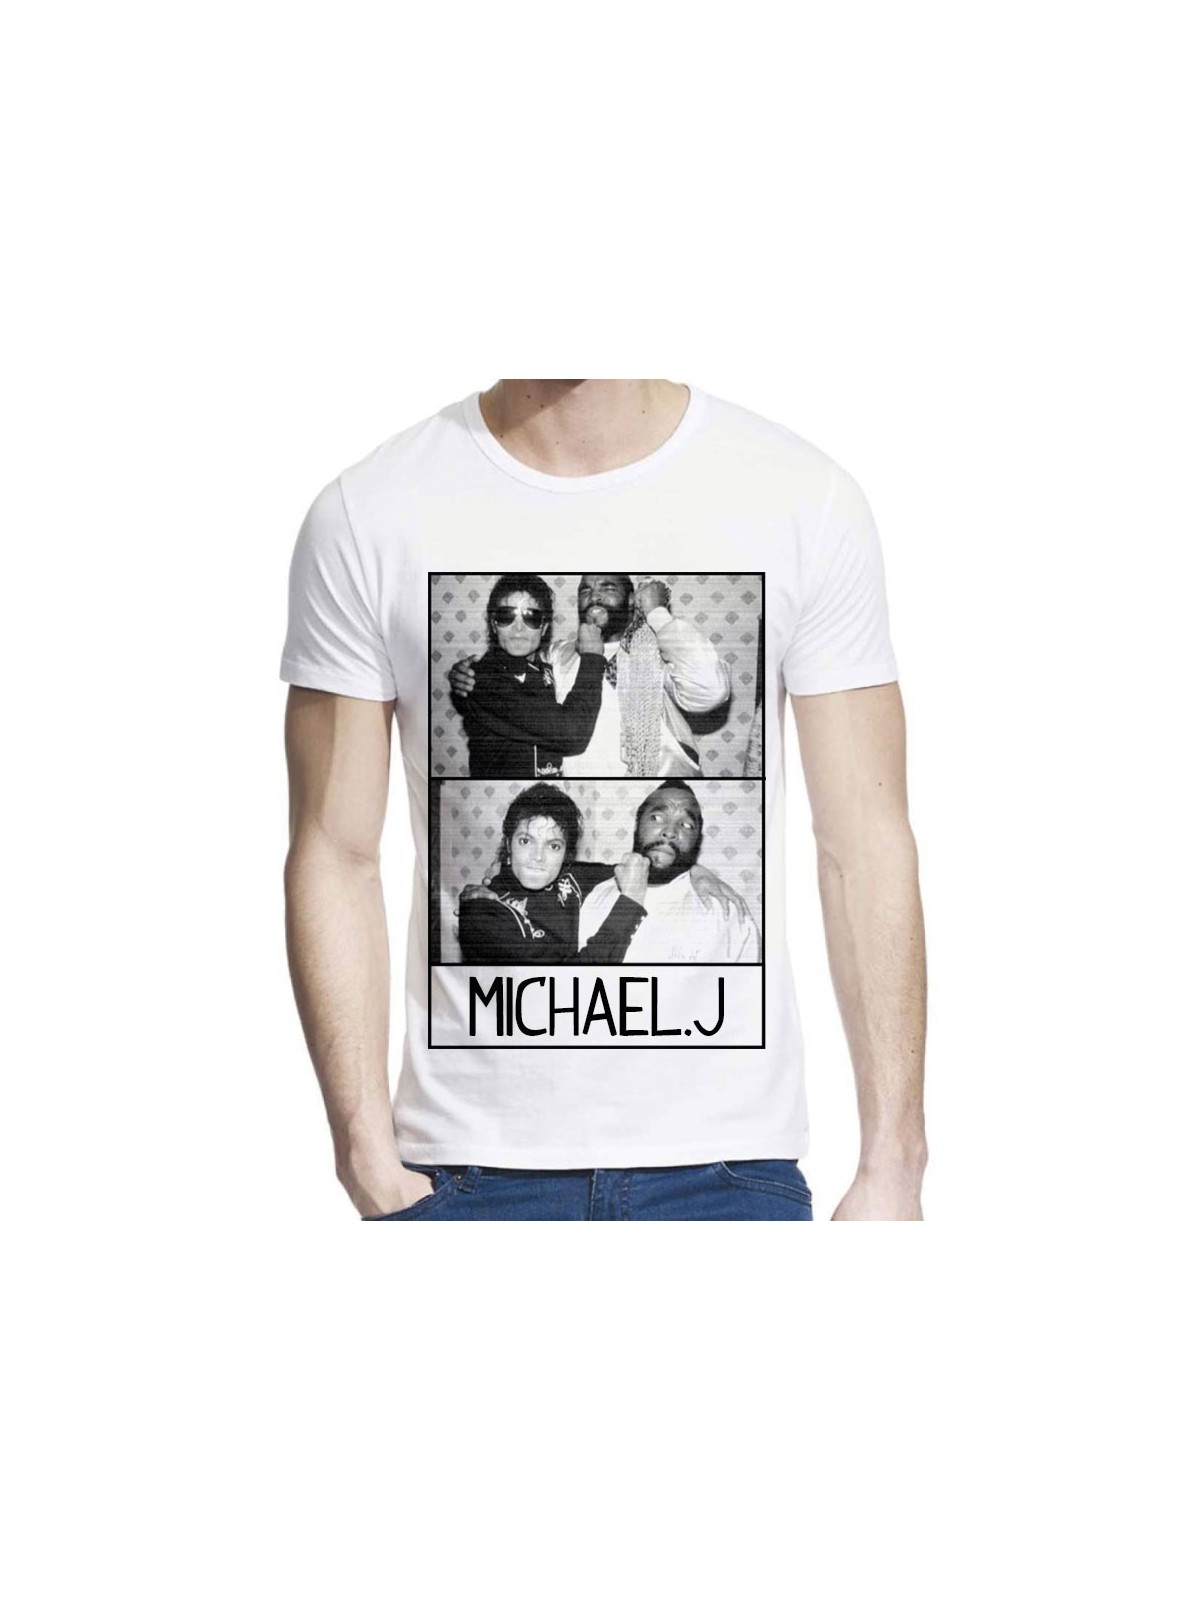 T-Shirt Michael jackson ref 797